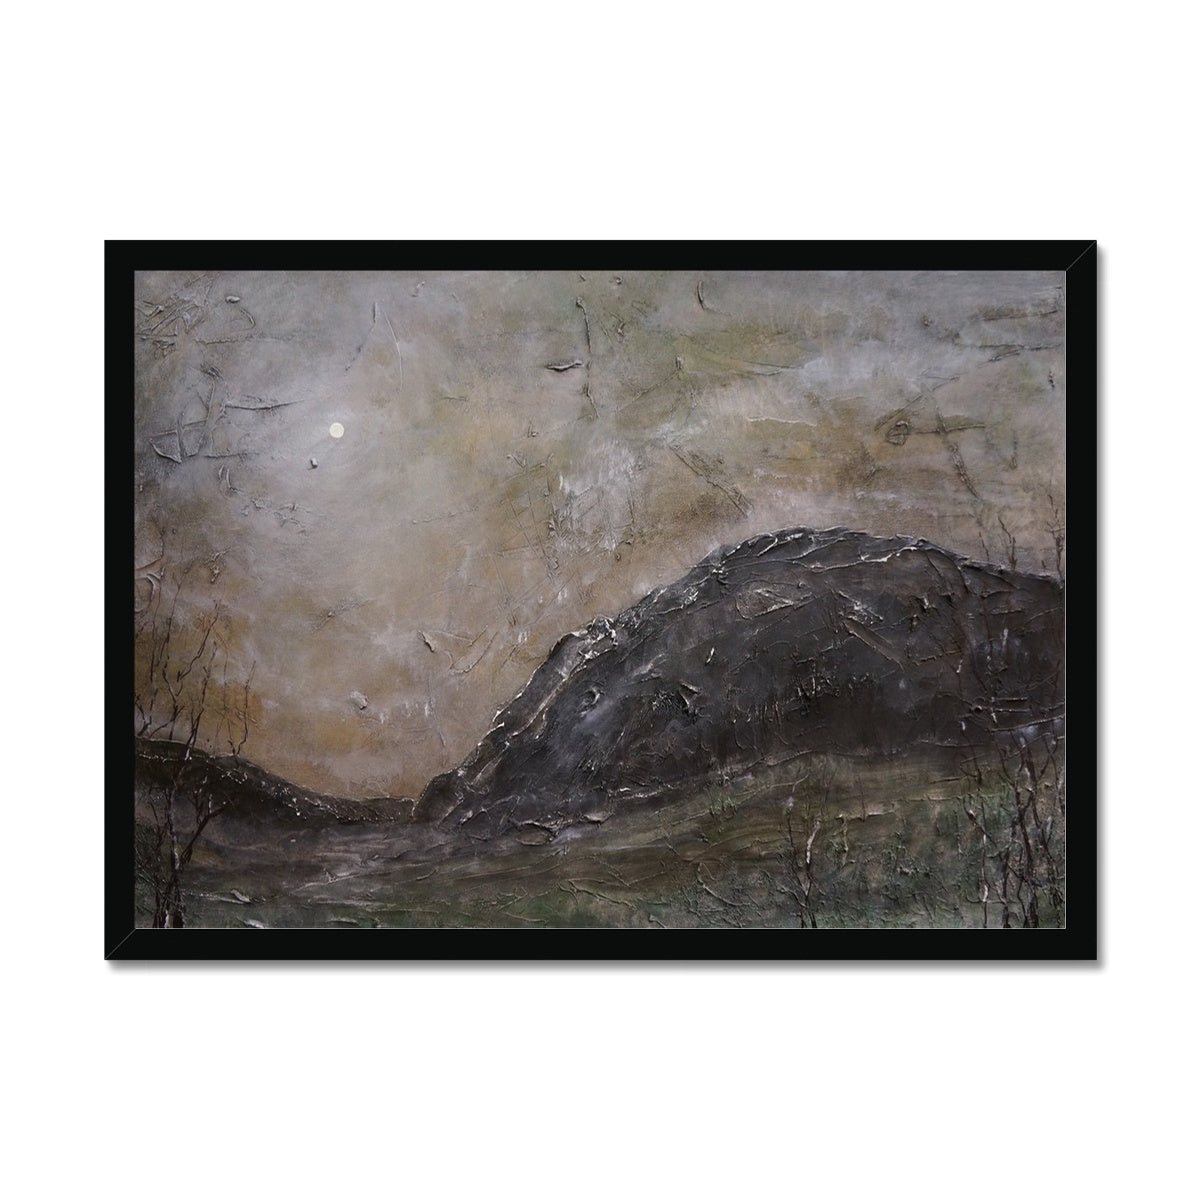 Glen Nevis Moonlight Painting | Framed Prints From Scotland-Framed Prints-Scottish Lochs & Mountains Art Gallery-A2 Landscape-Black Frame-Paintings, Prints, Homeware, Art Gifts From Scotland By Scottish Artist Kevin Hunter